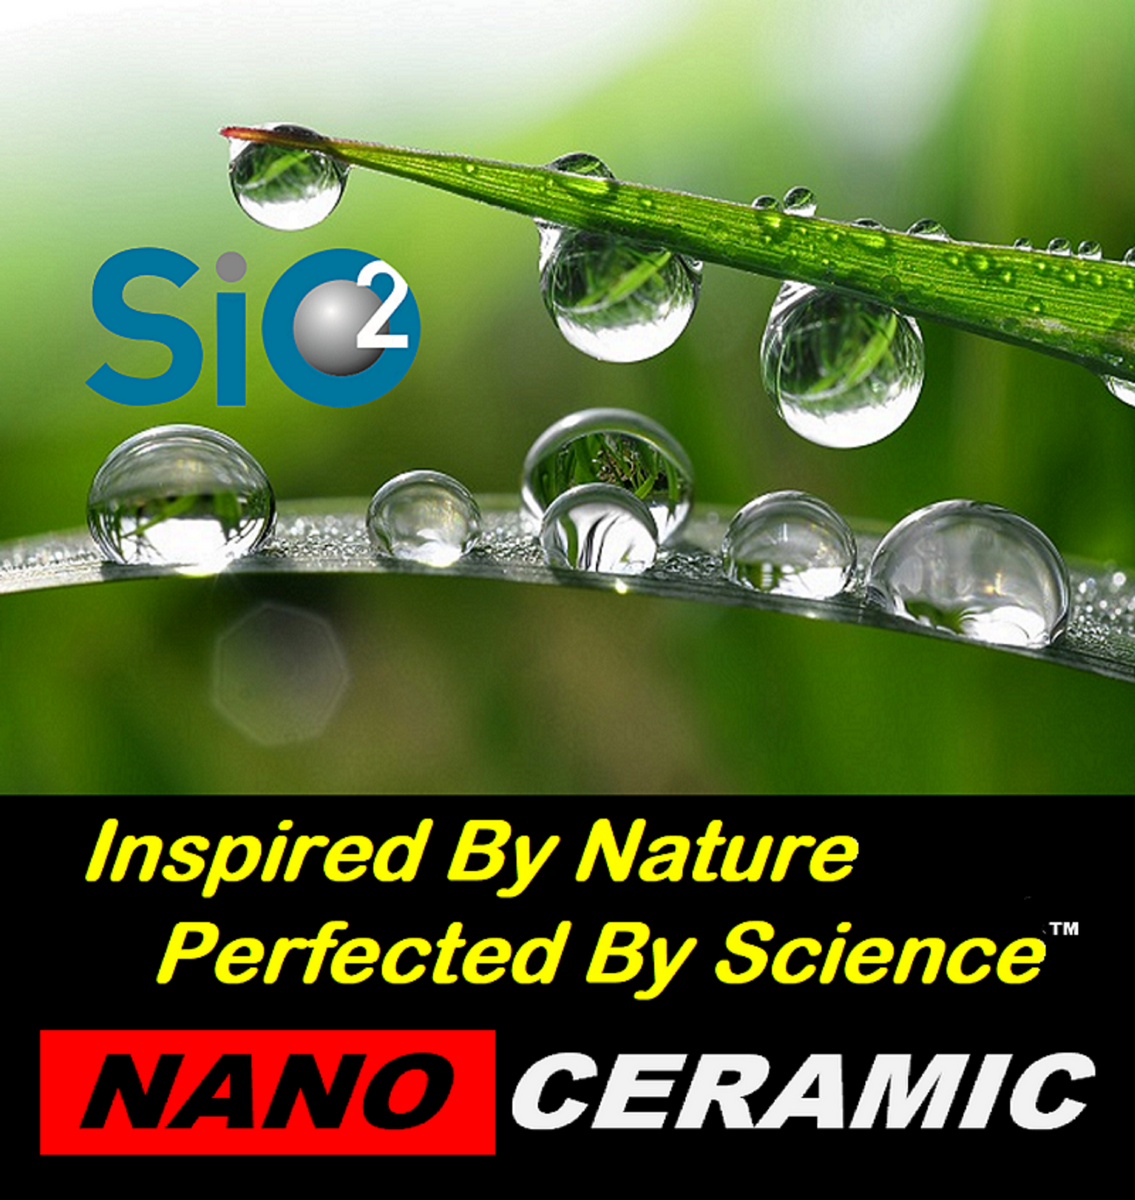 Cobalt 9h Ceramic Clear Coat Spray – Xtreme Nano